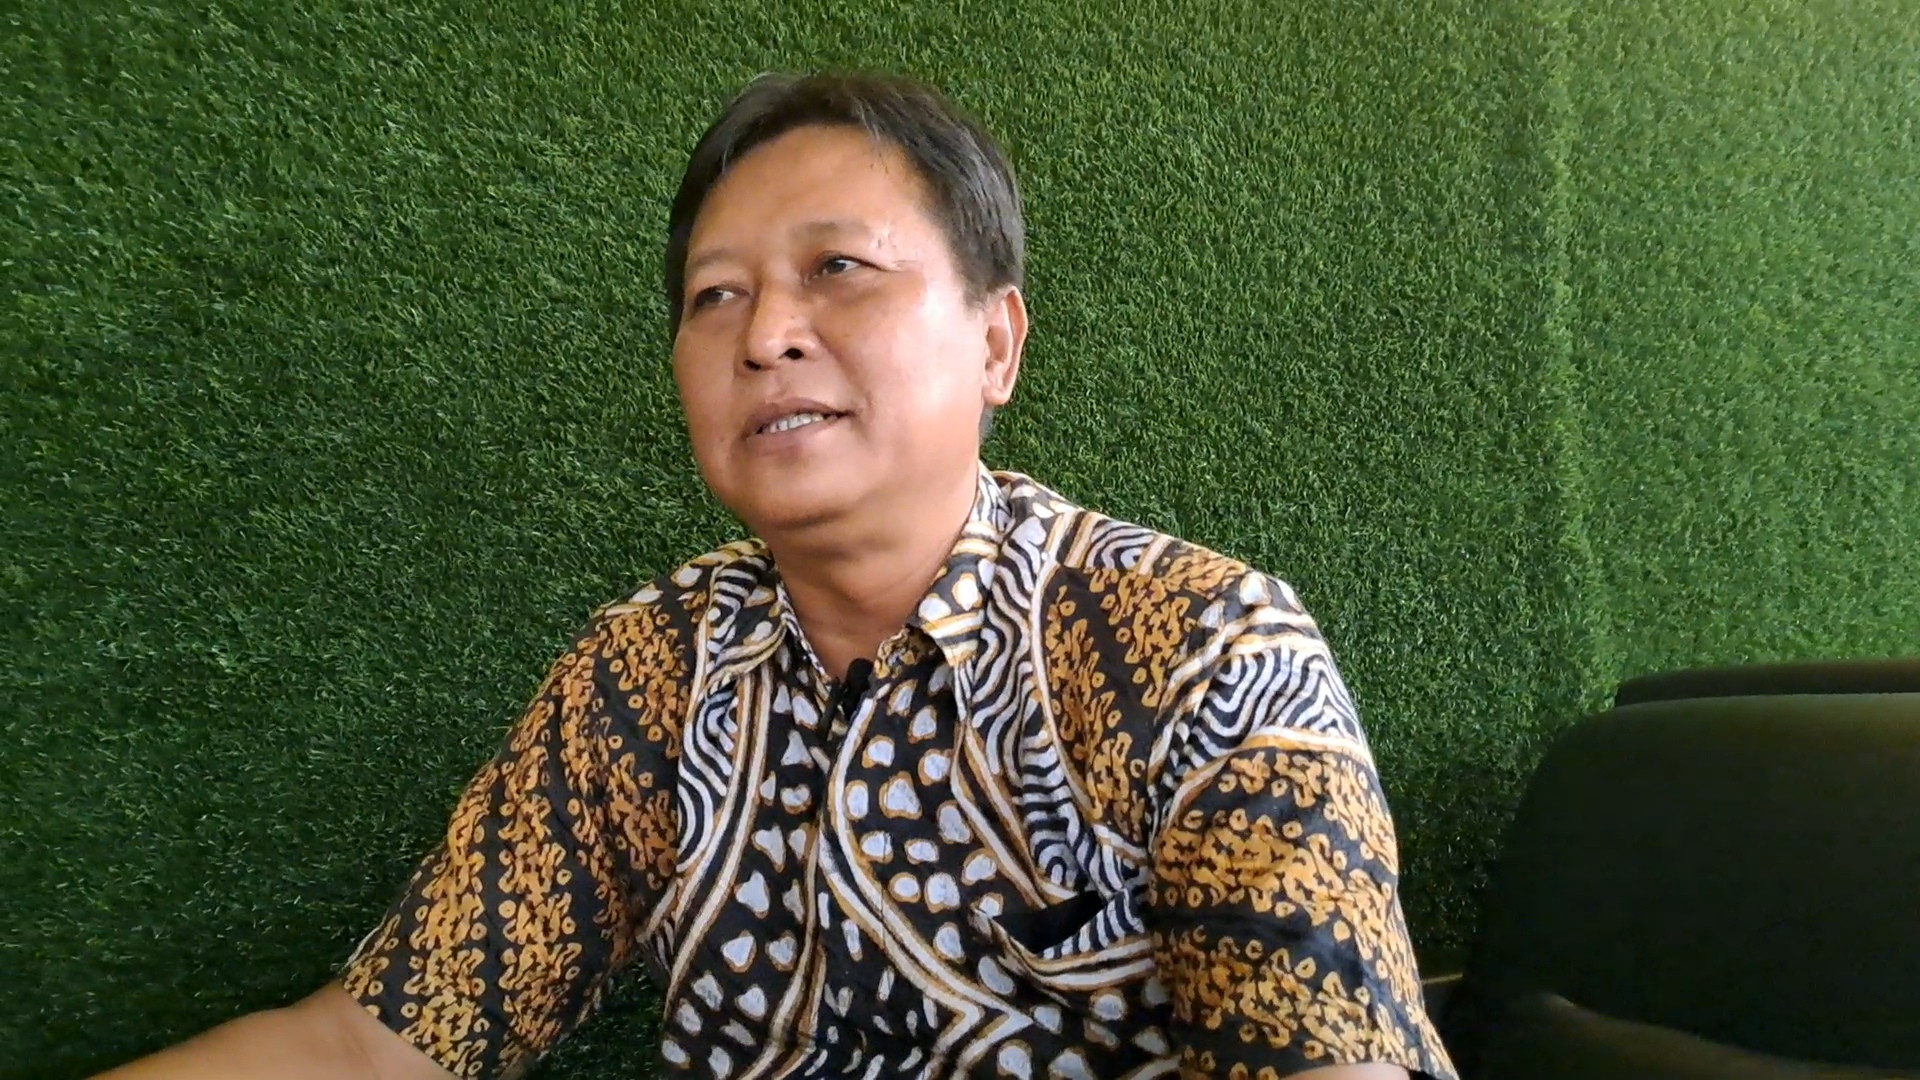 Politikus Senior PDIP Ini Siap Maju Pilkada Semarang 2024 - JPNN.com Jateng